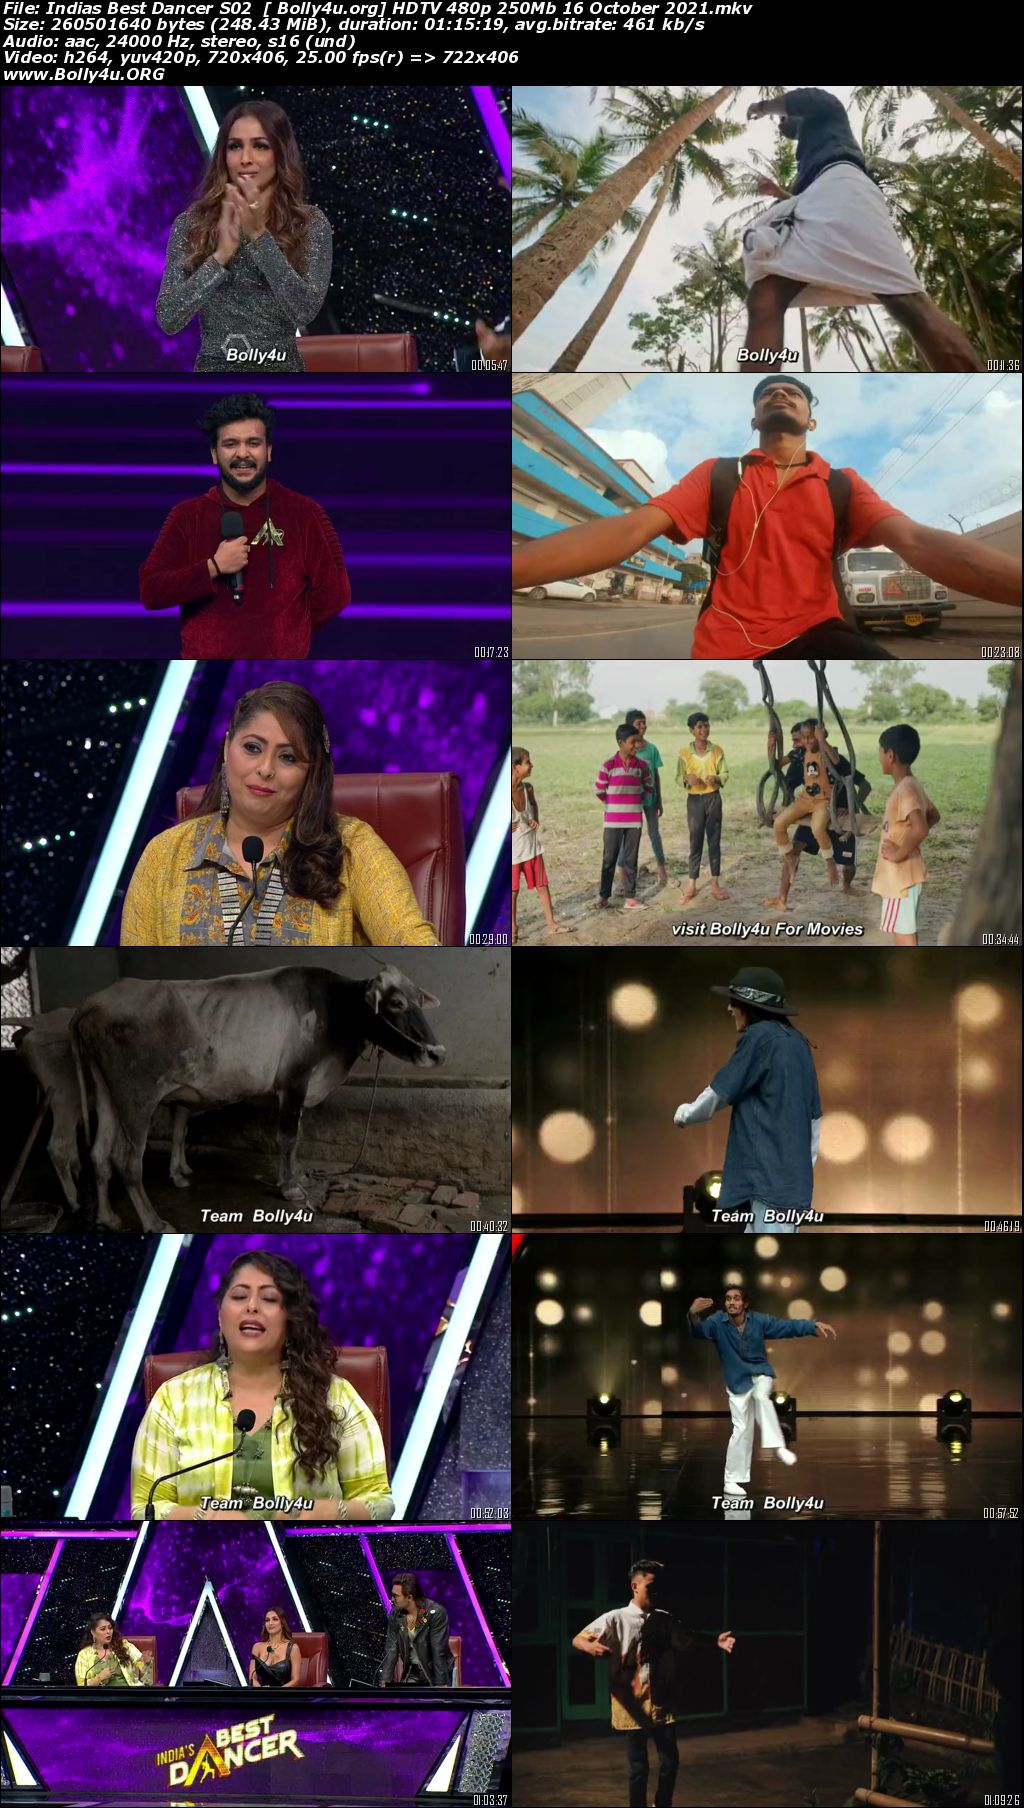 Indias Best Dancer S02 HDTV 480p 250Mb 16 October 2021 Download